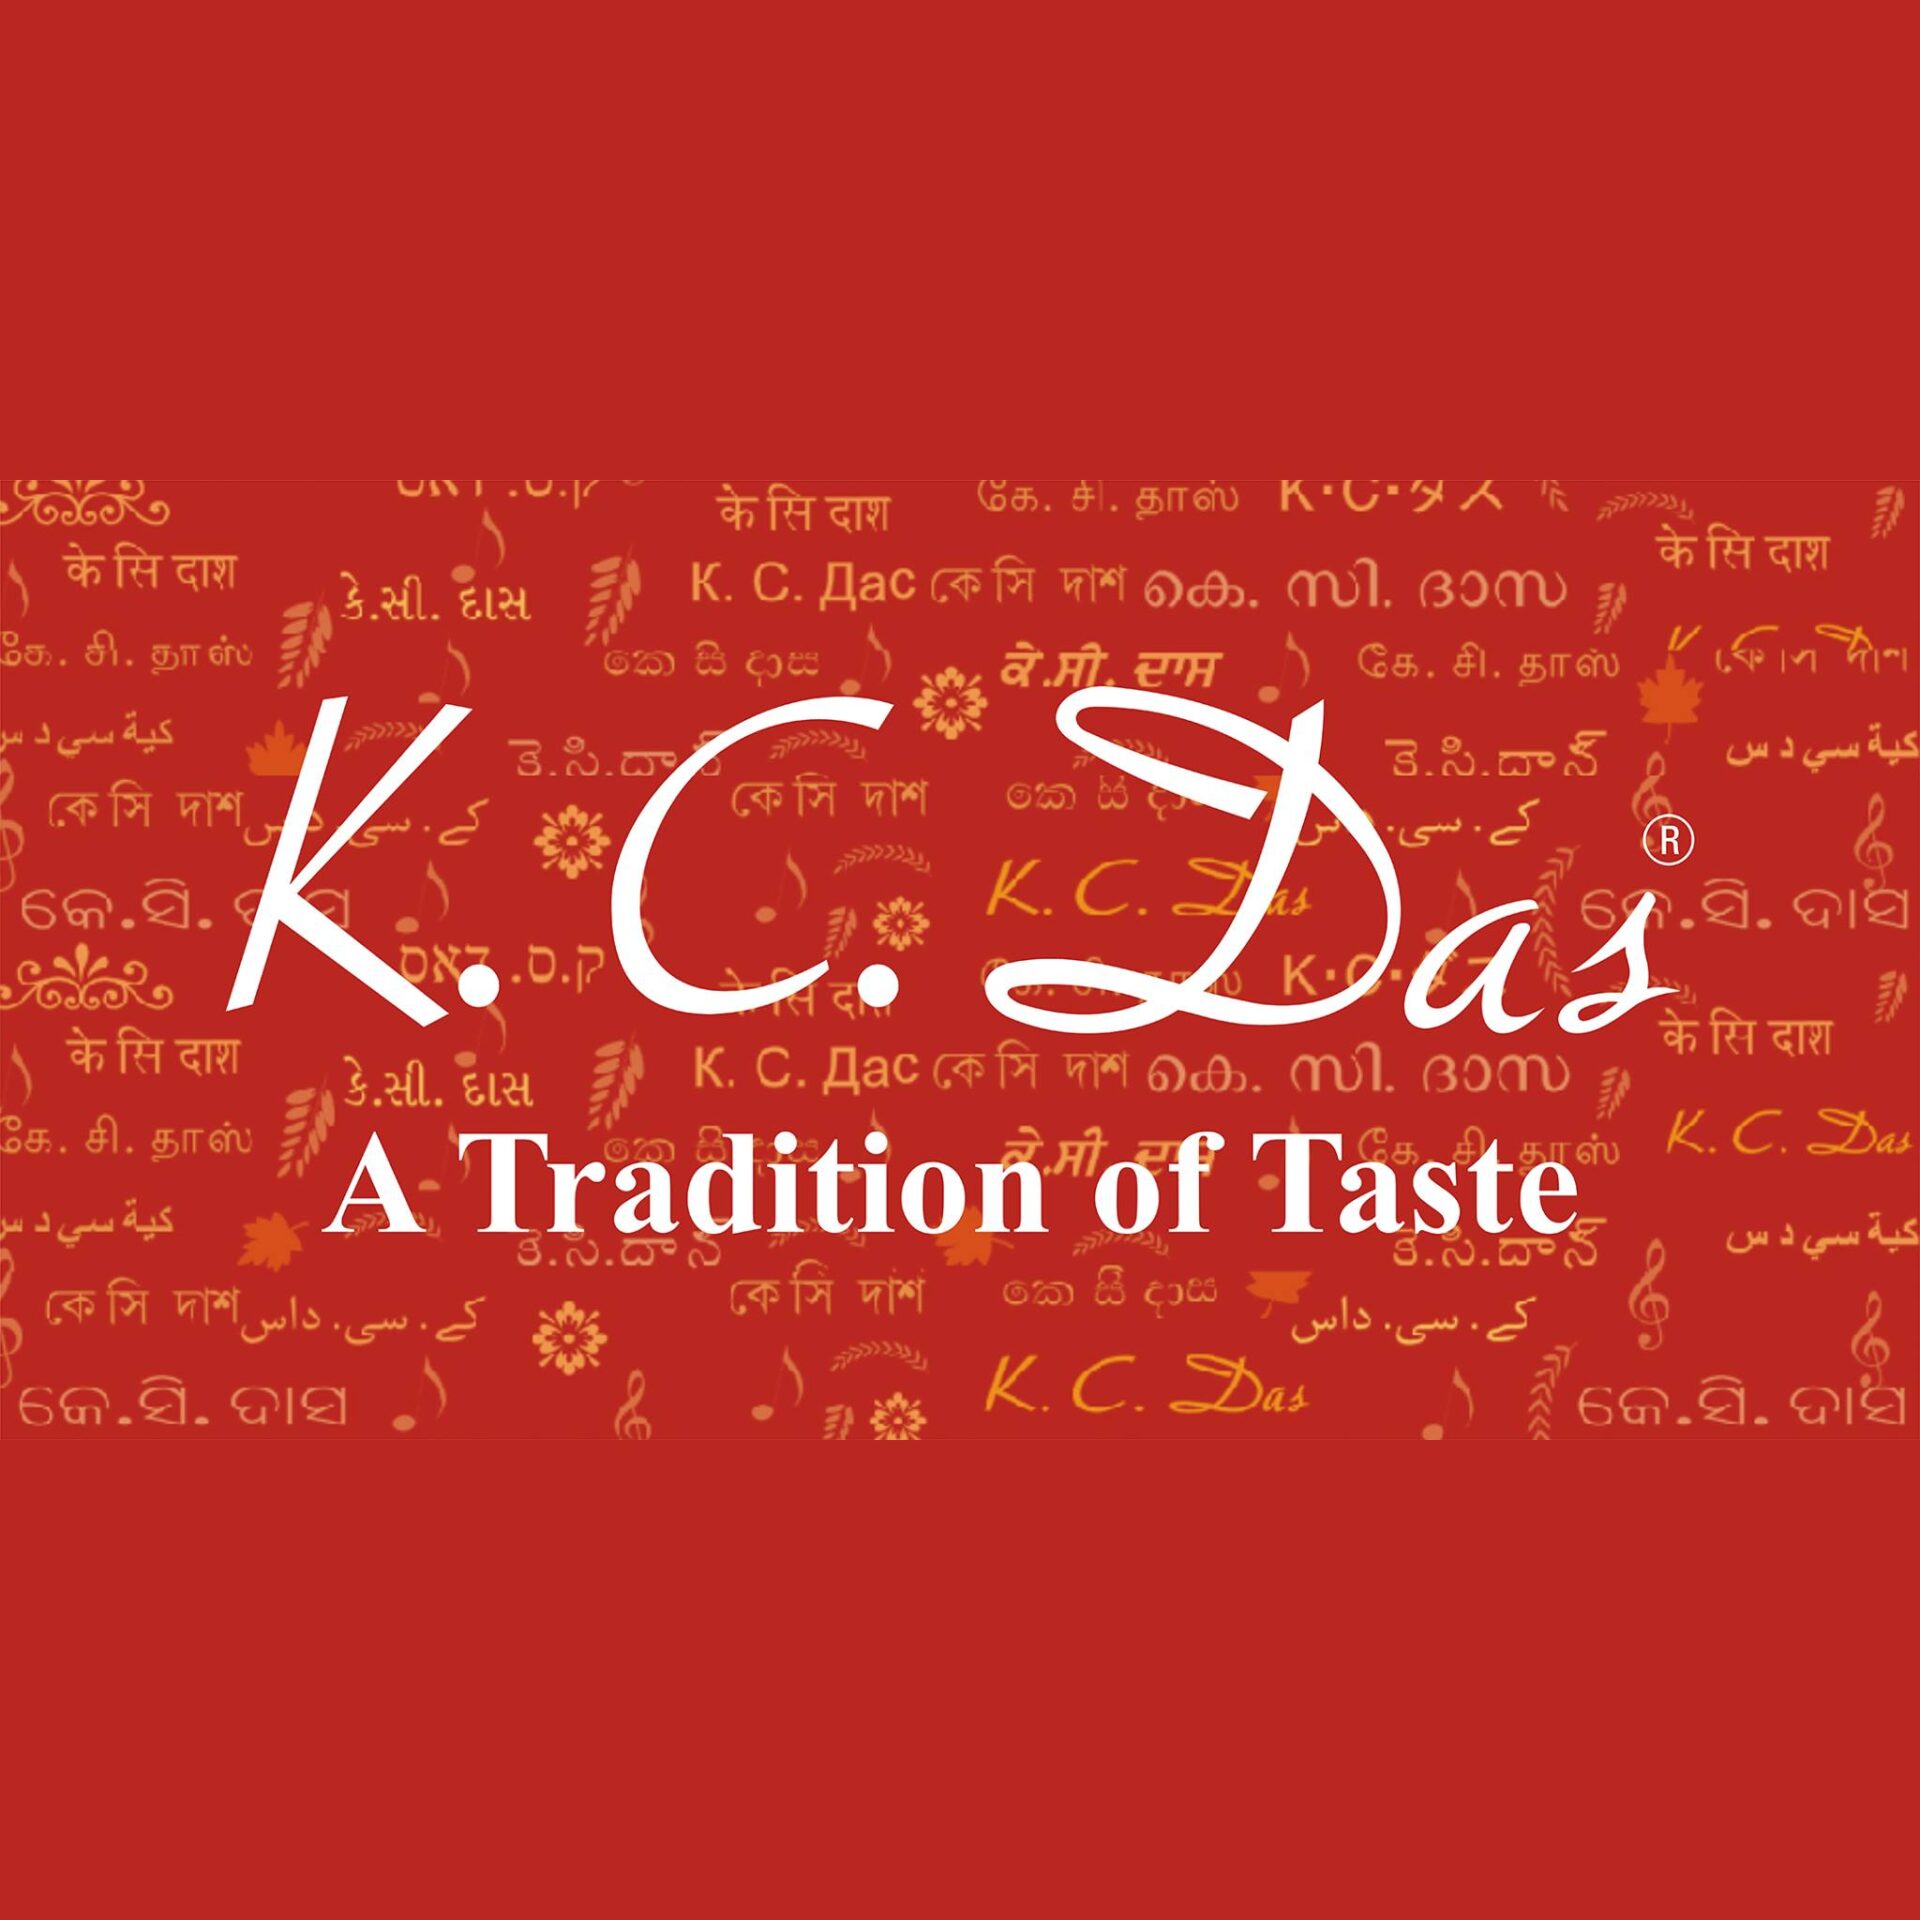 k-C-das-logo.jpeg